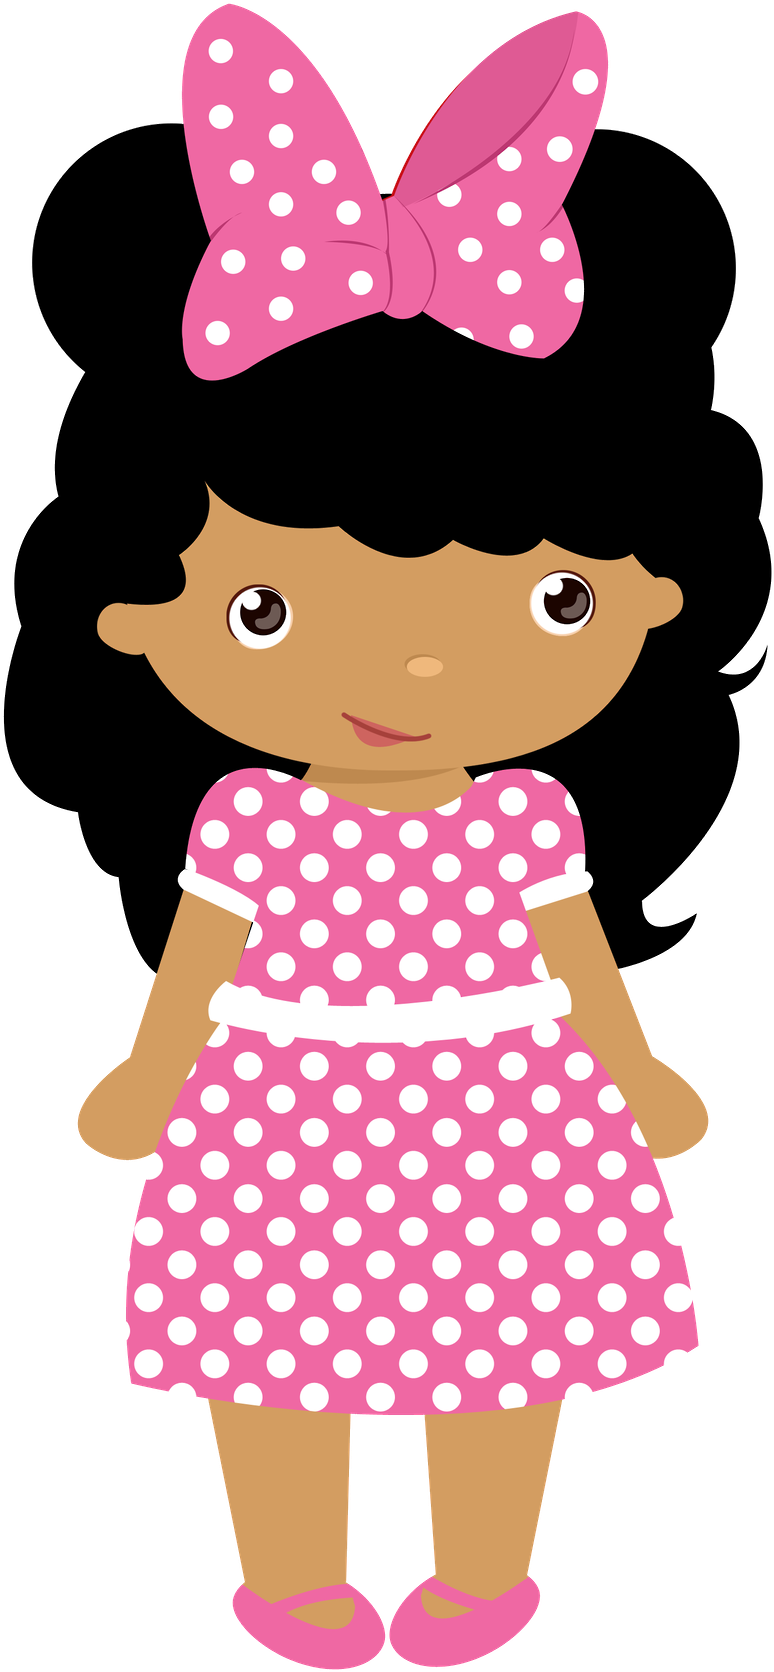 A Cartoon Of A Girl In A Pink Dress